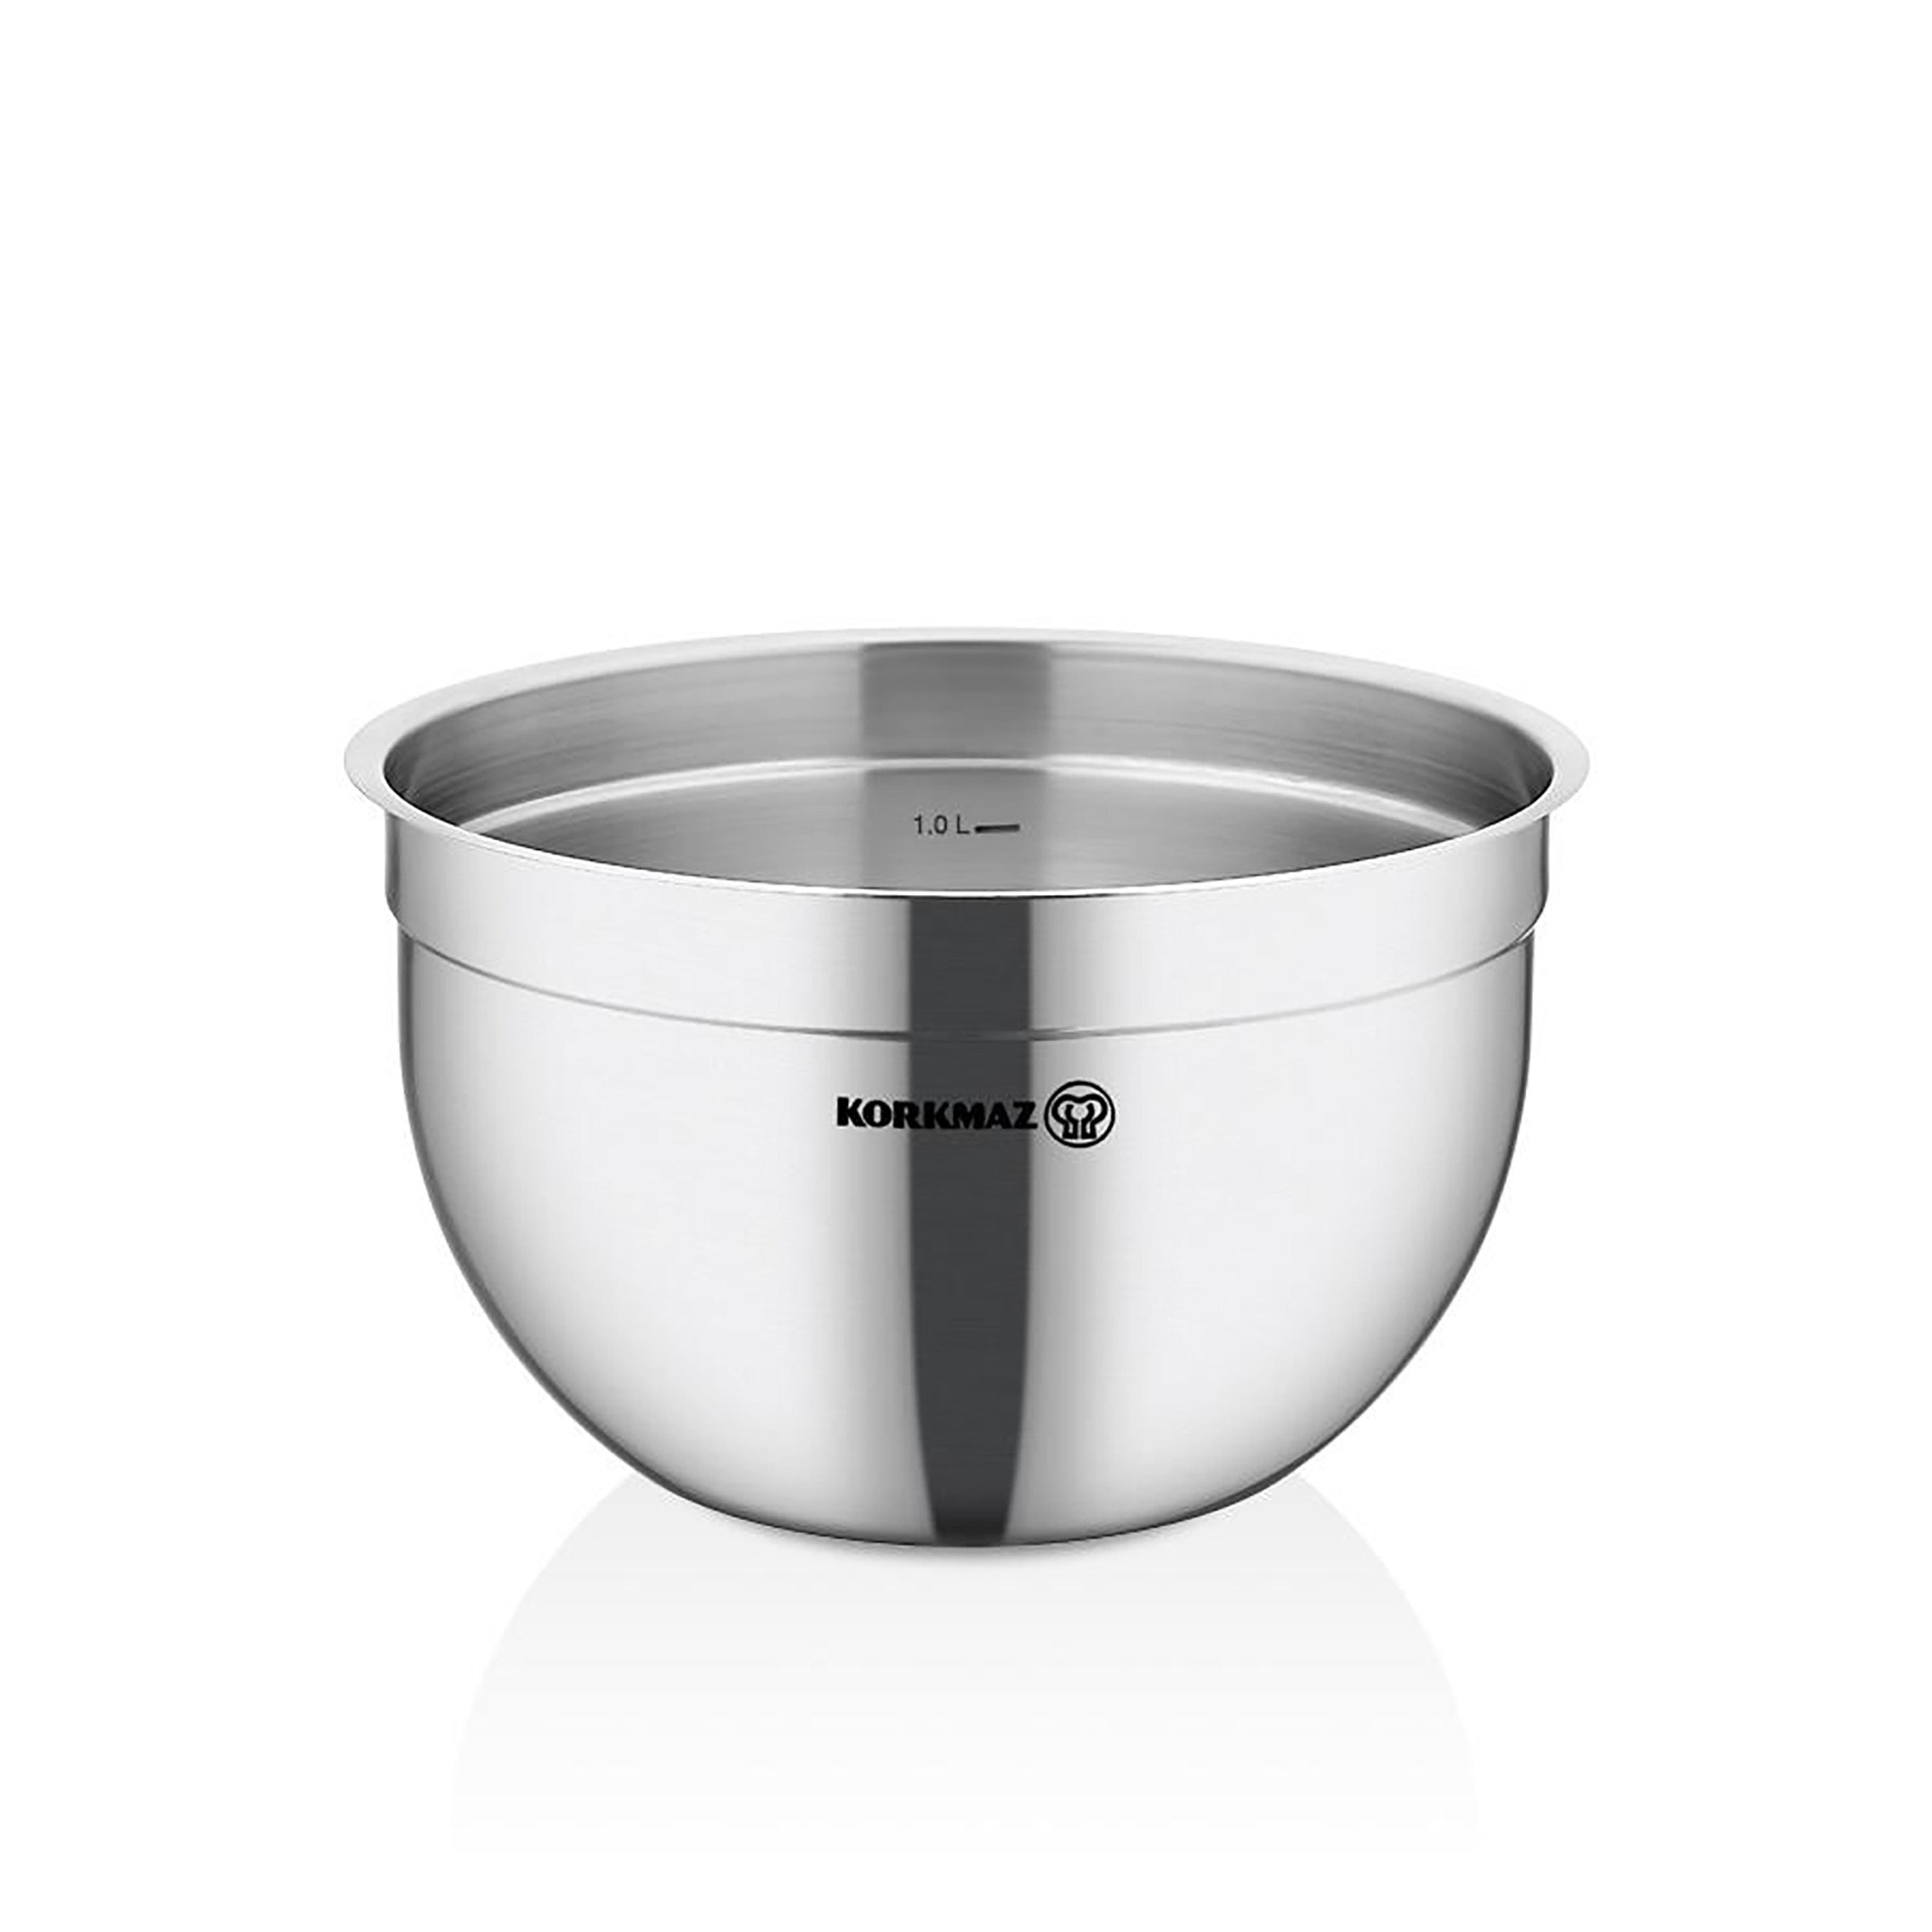 Korkmaz Gastro Proline 1.8 Quart Stainless Steel Mixing Bowl in Silver